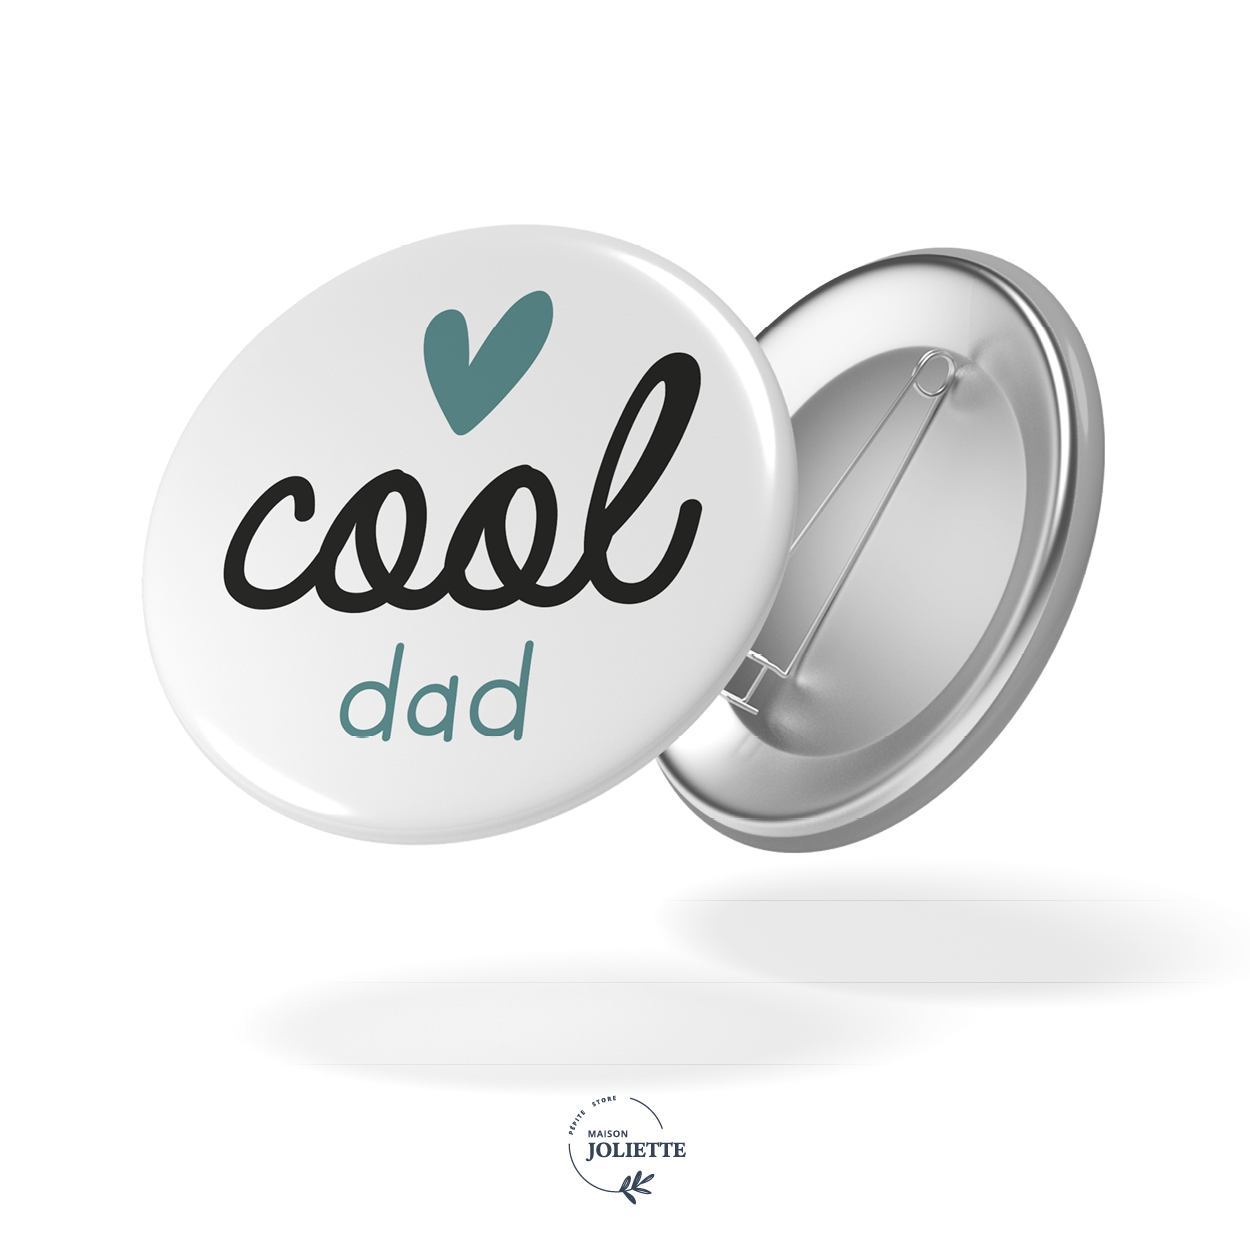 Cool dad - Badge #41